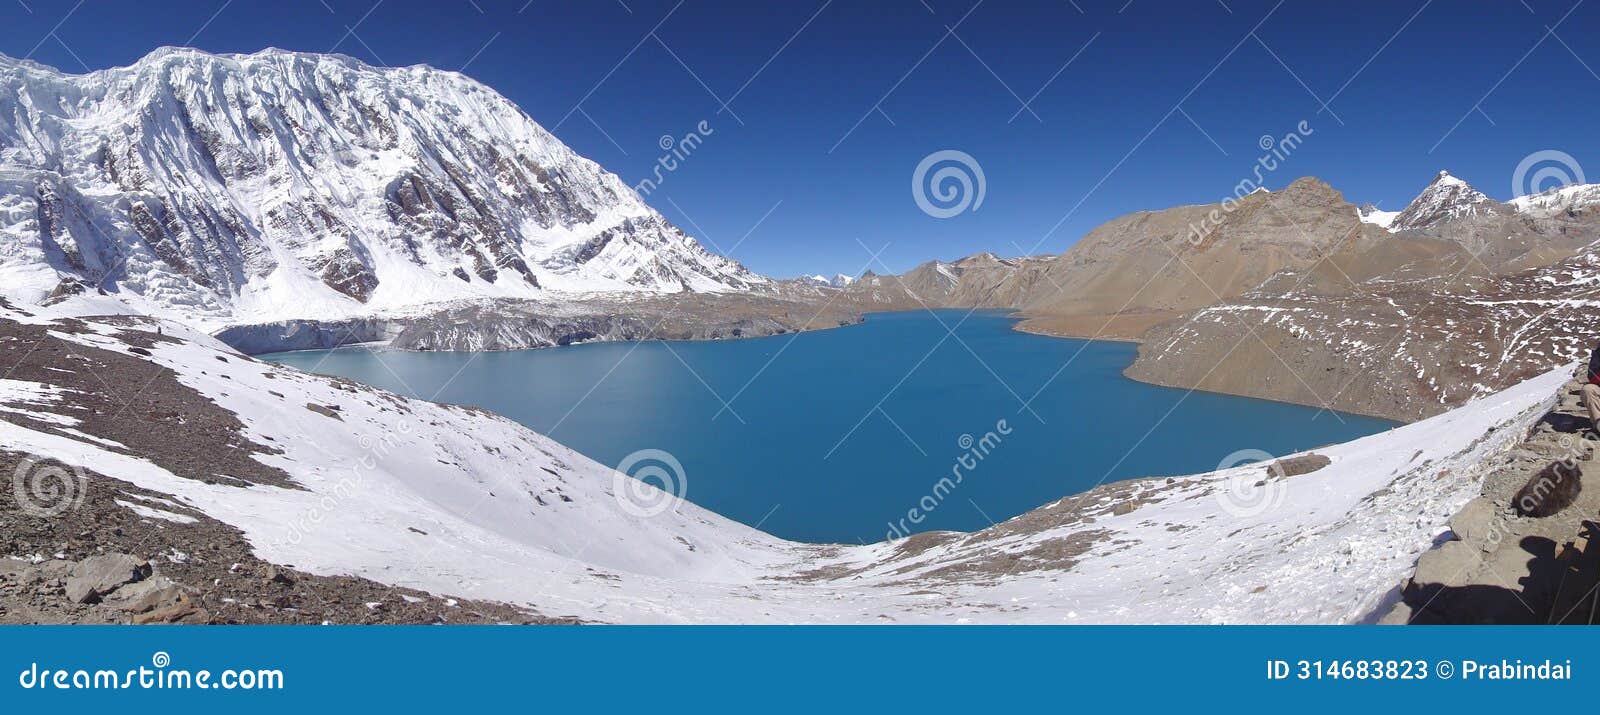 highest lake in nepal tilicho at manang